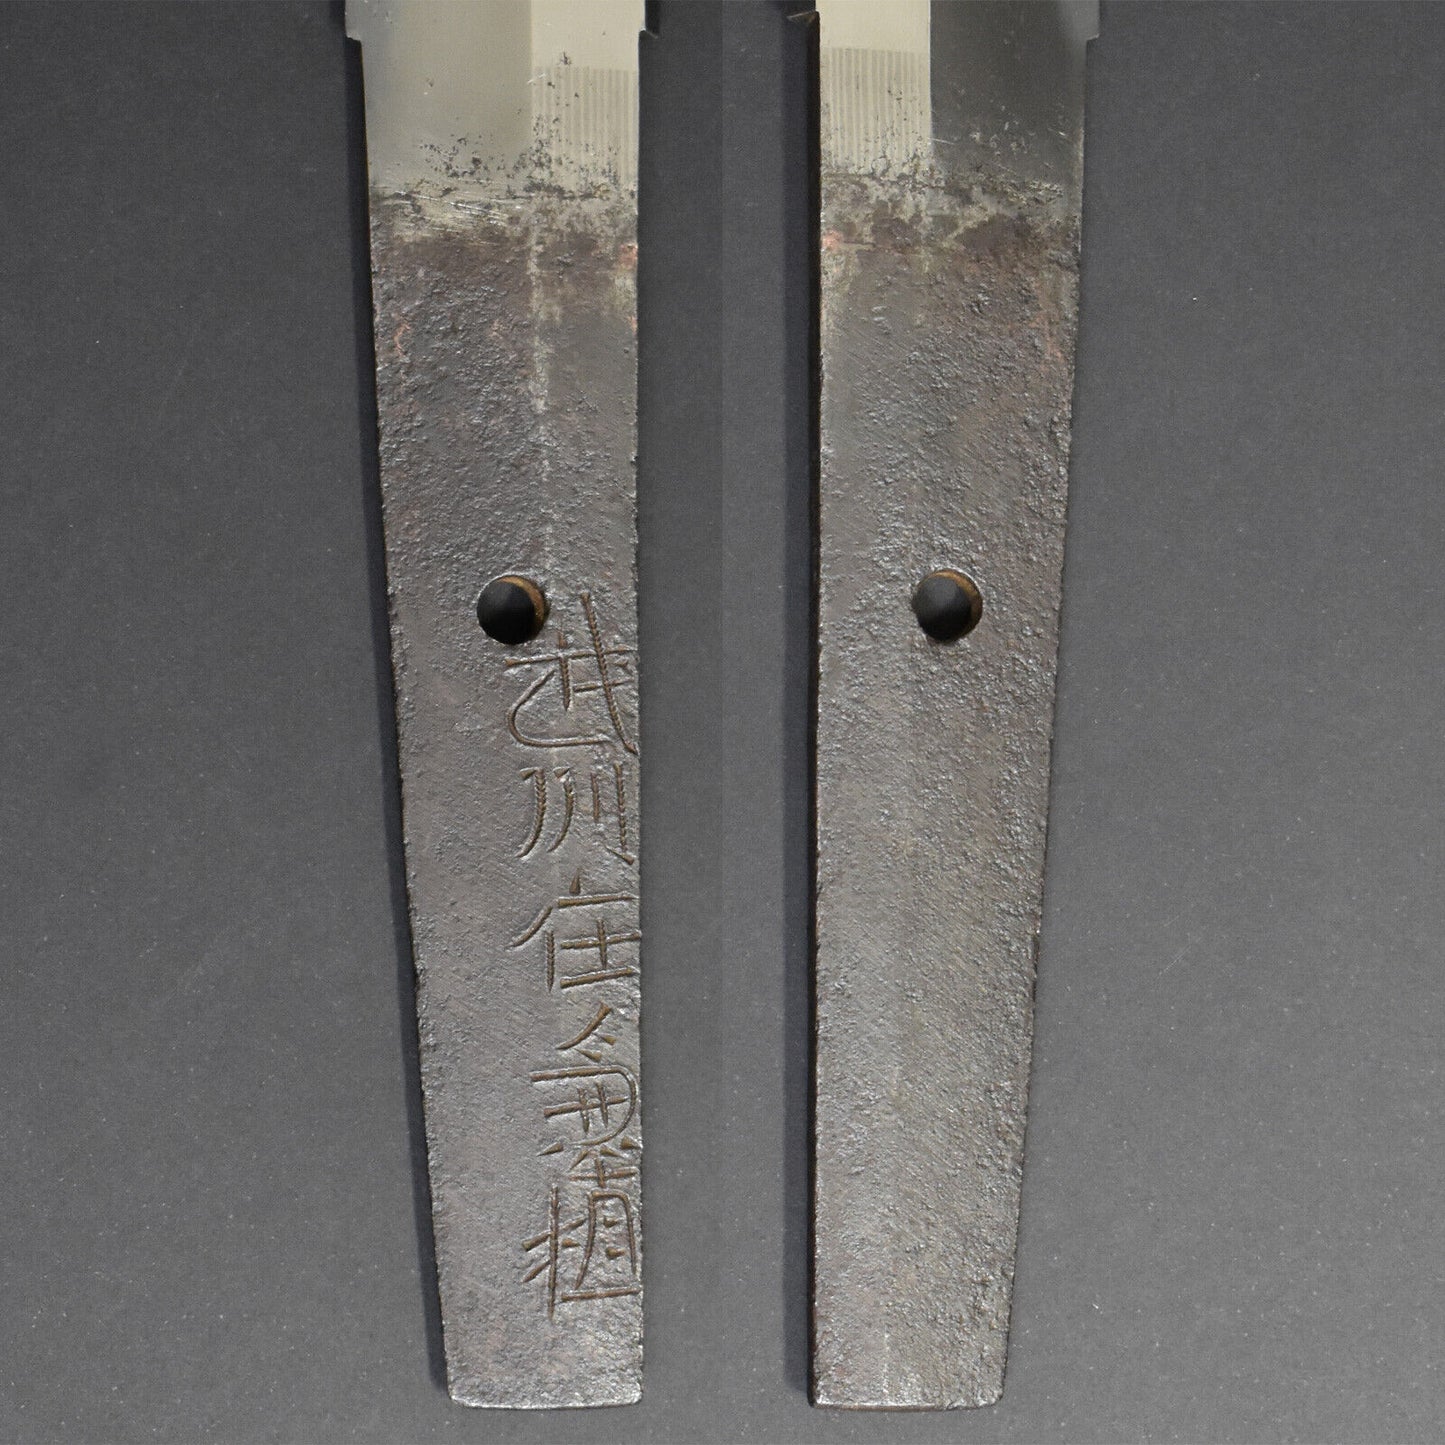 Collectible Signed Japanese Katana Samurai Sword Tamahagane Steel Edo Era.